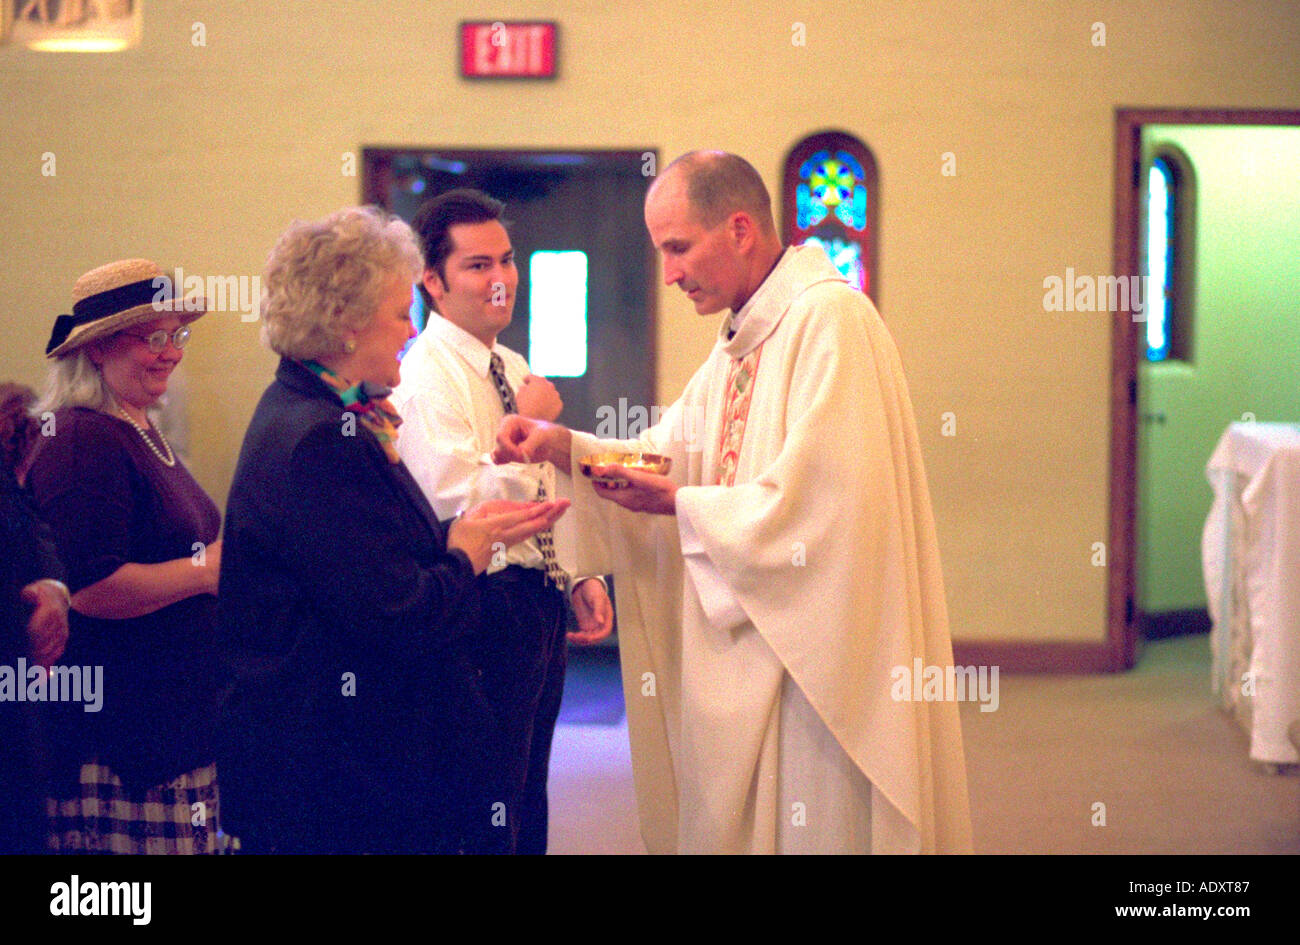 Catholic priest performing Eucharist at wedding service. St Paul Minnesota USA Stock Photo